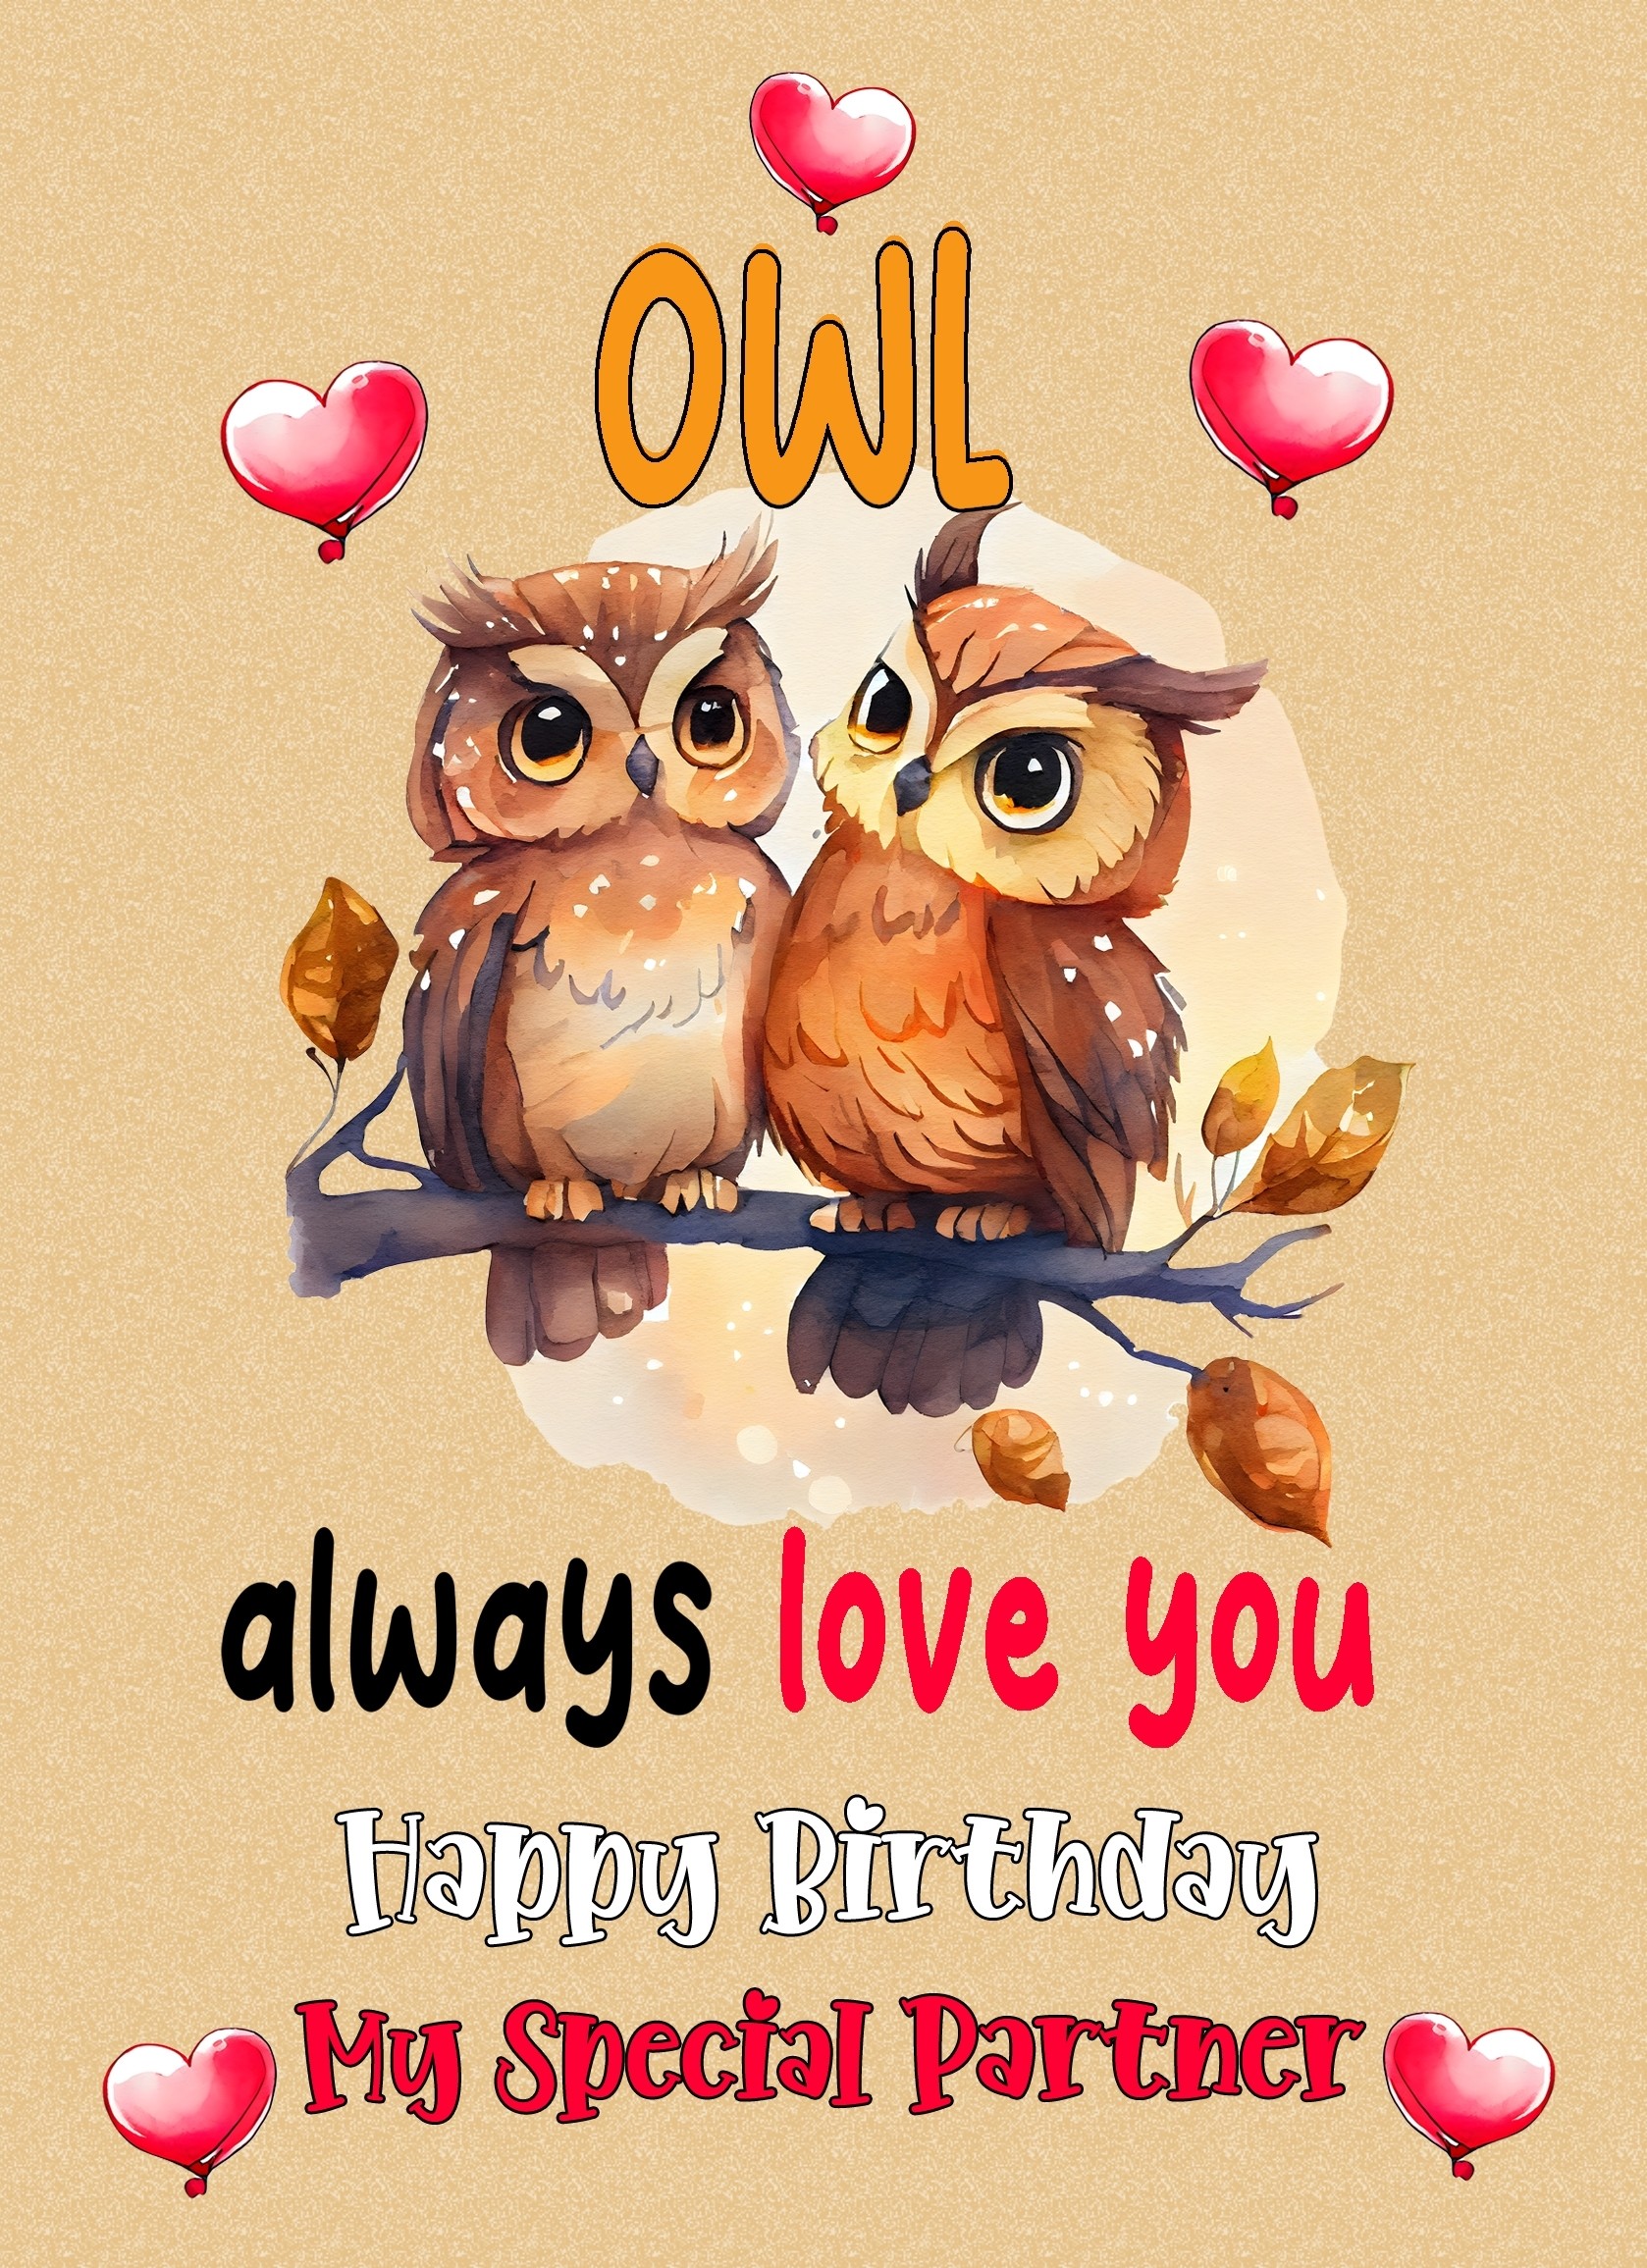 Funny Pun Romantic Birthday Card for Partner (Owl Always Love You)